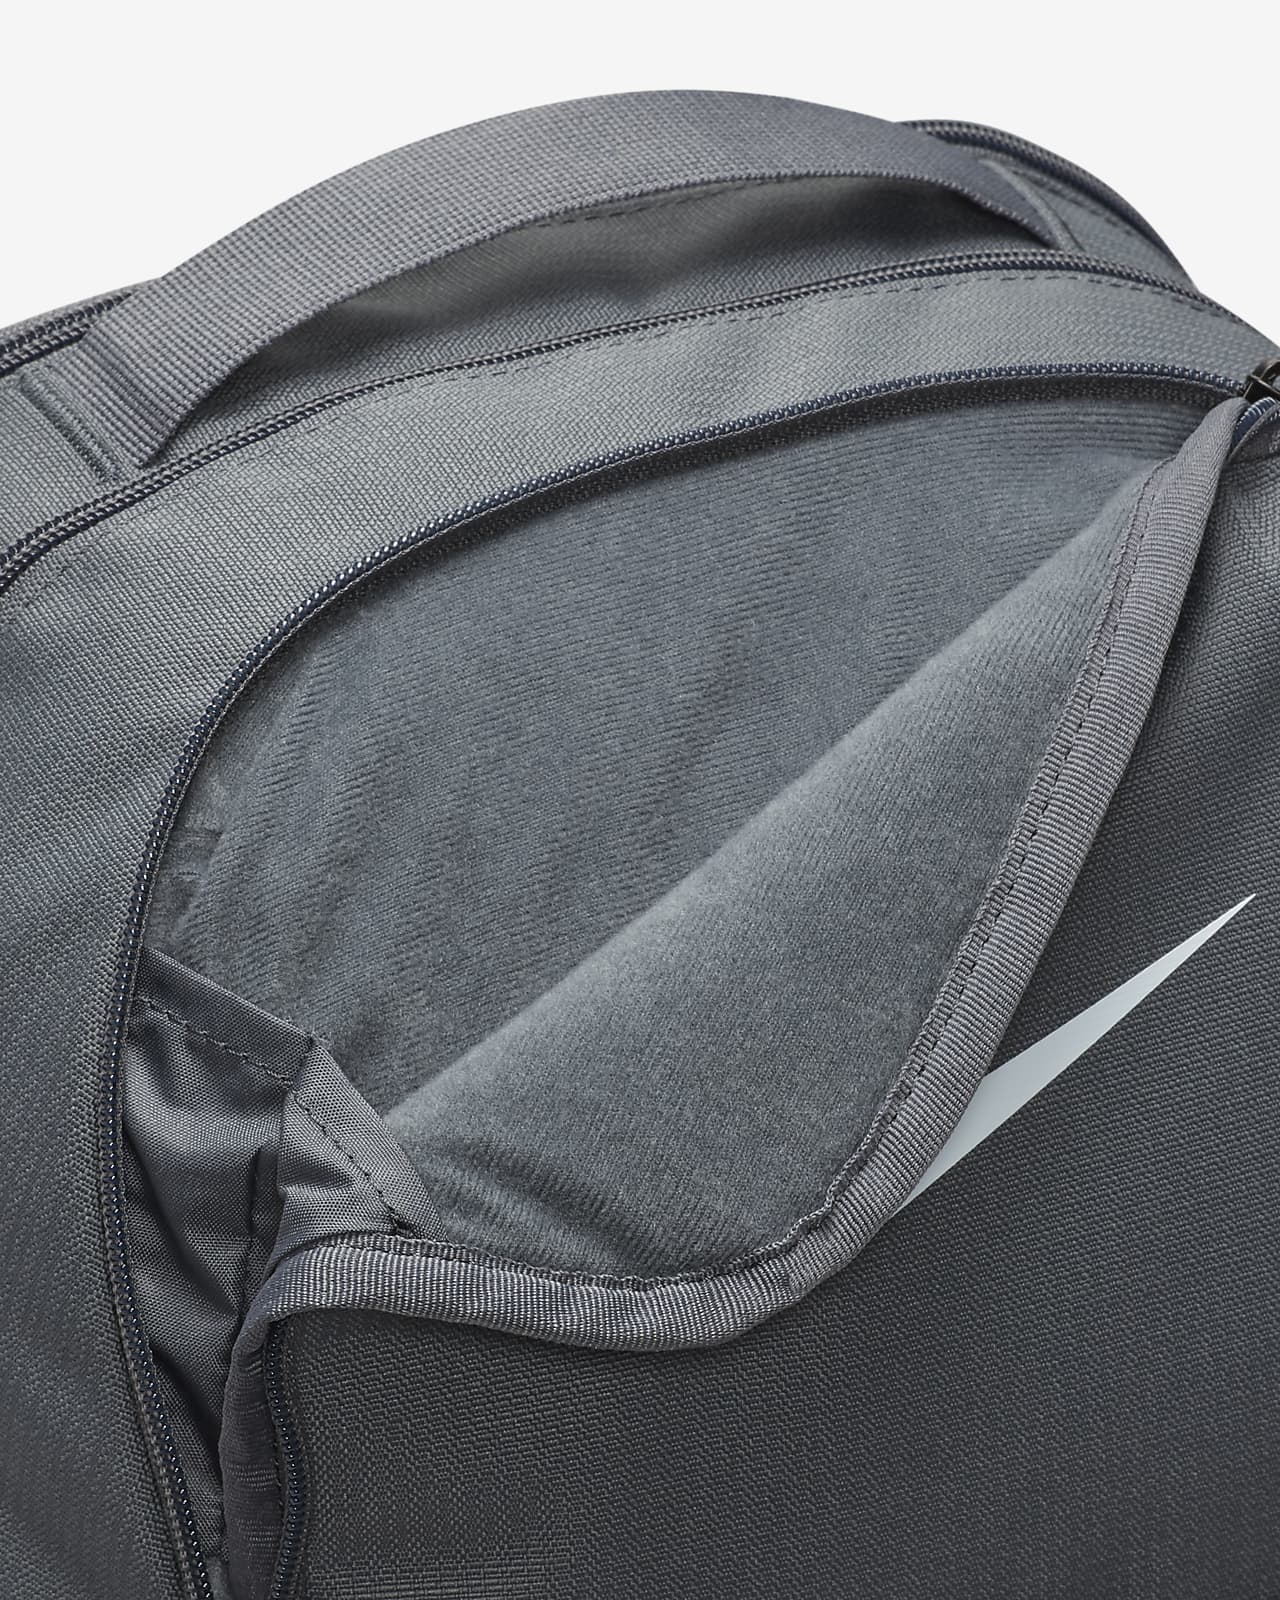 Nike Brasilia 9.5 Training Backpack (Medium, 24L).